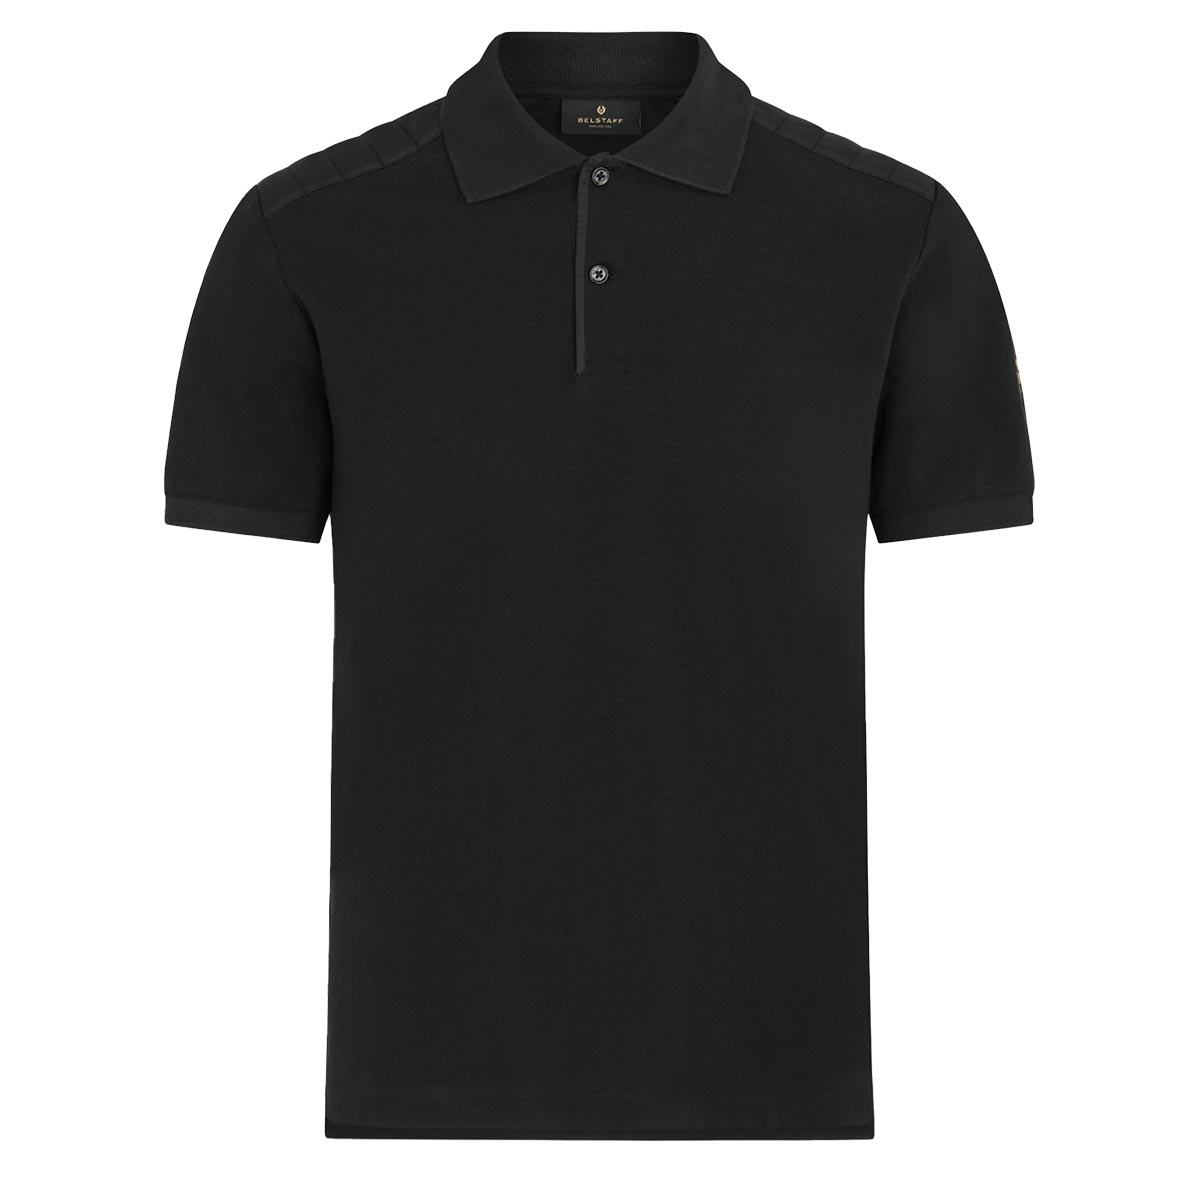 Belstaff Racing Polo Shirt in Black